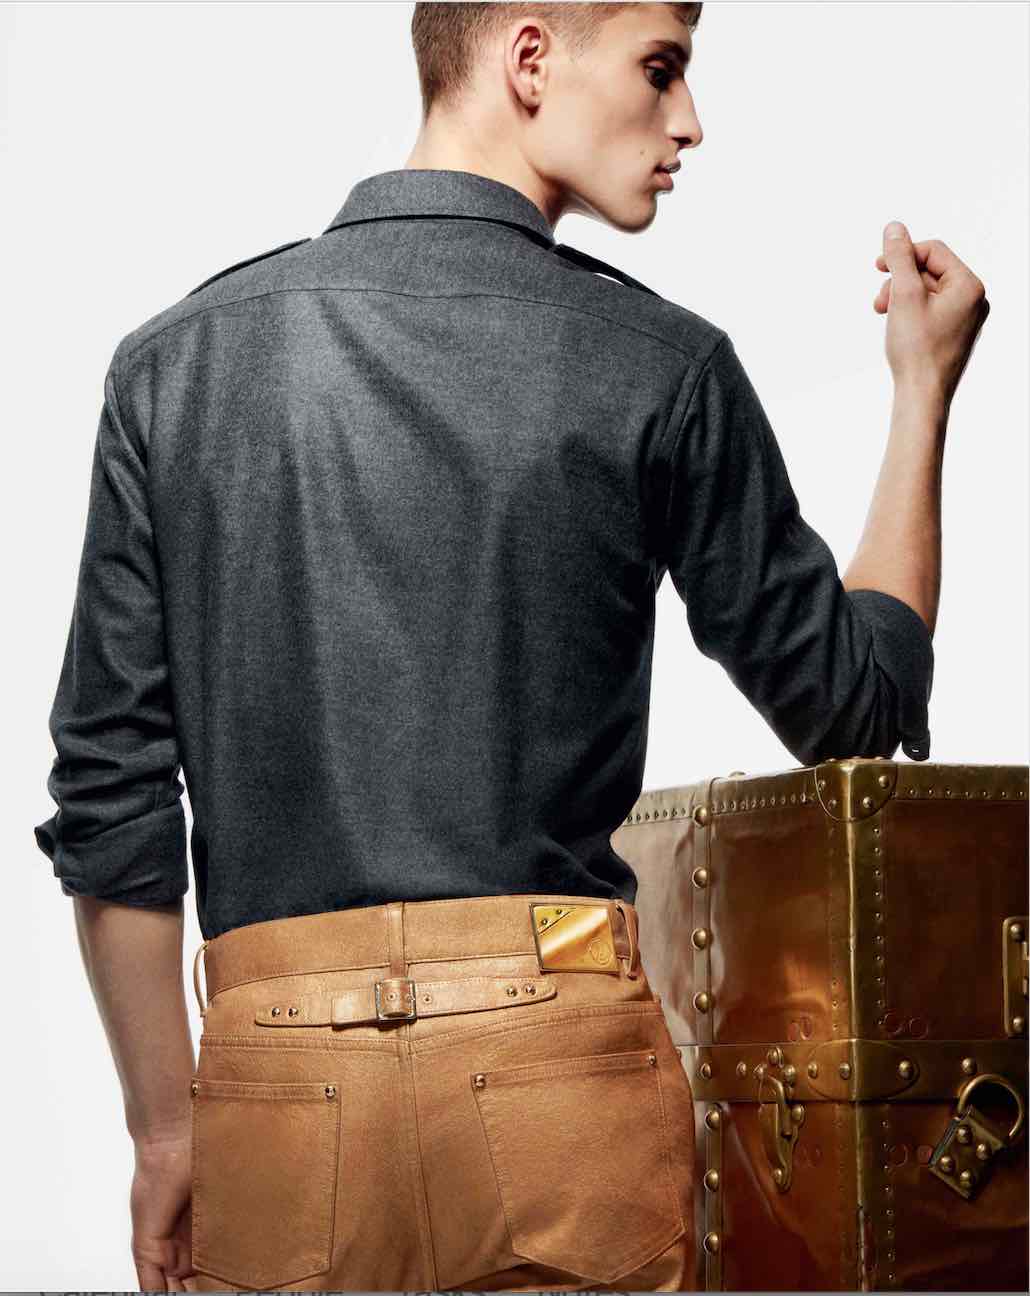 Louis Vuitton launches their Men’s Denim Collection